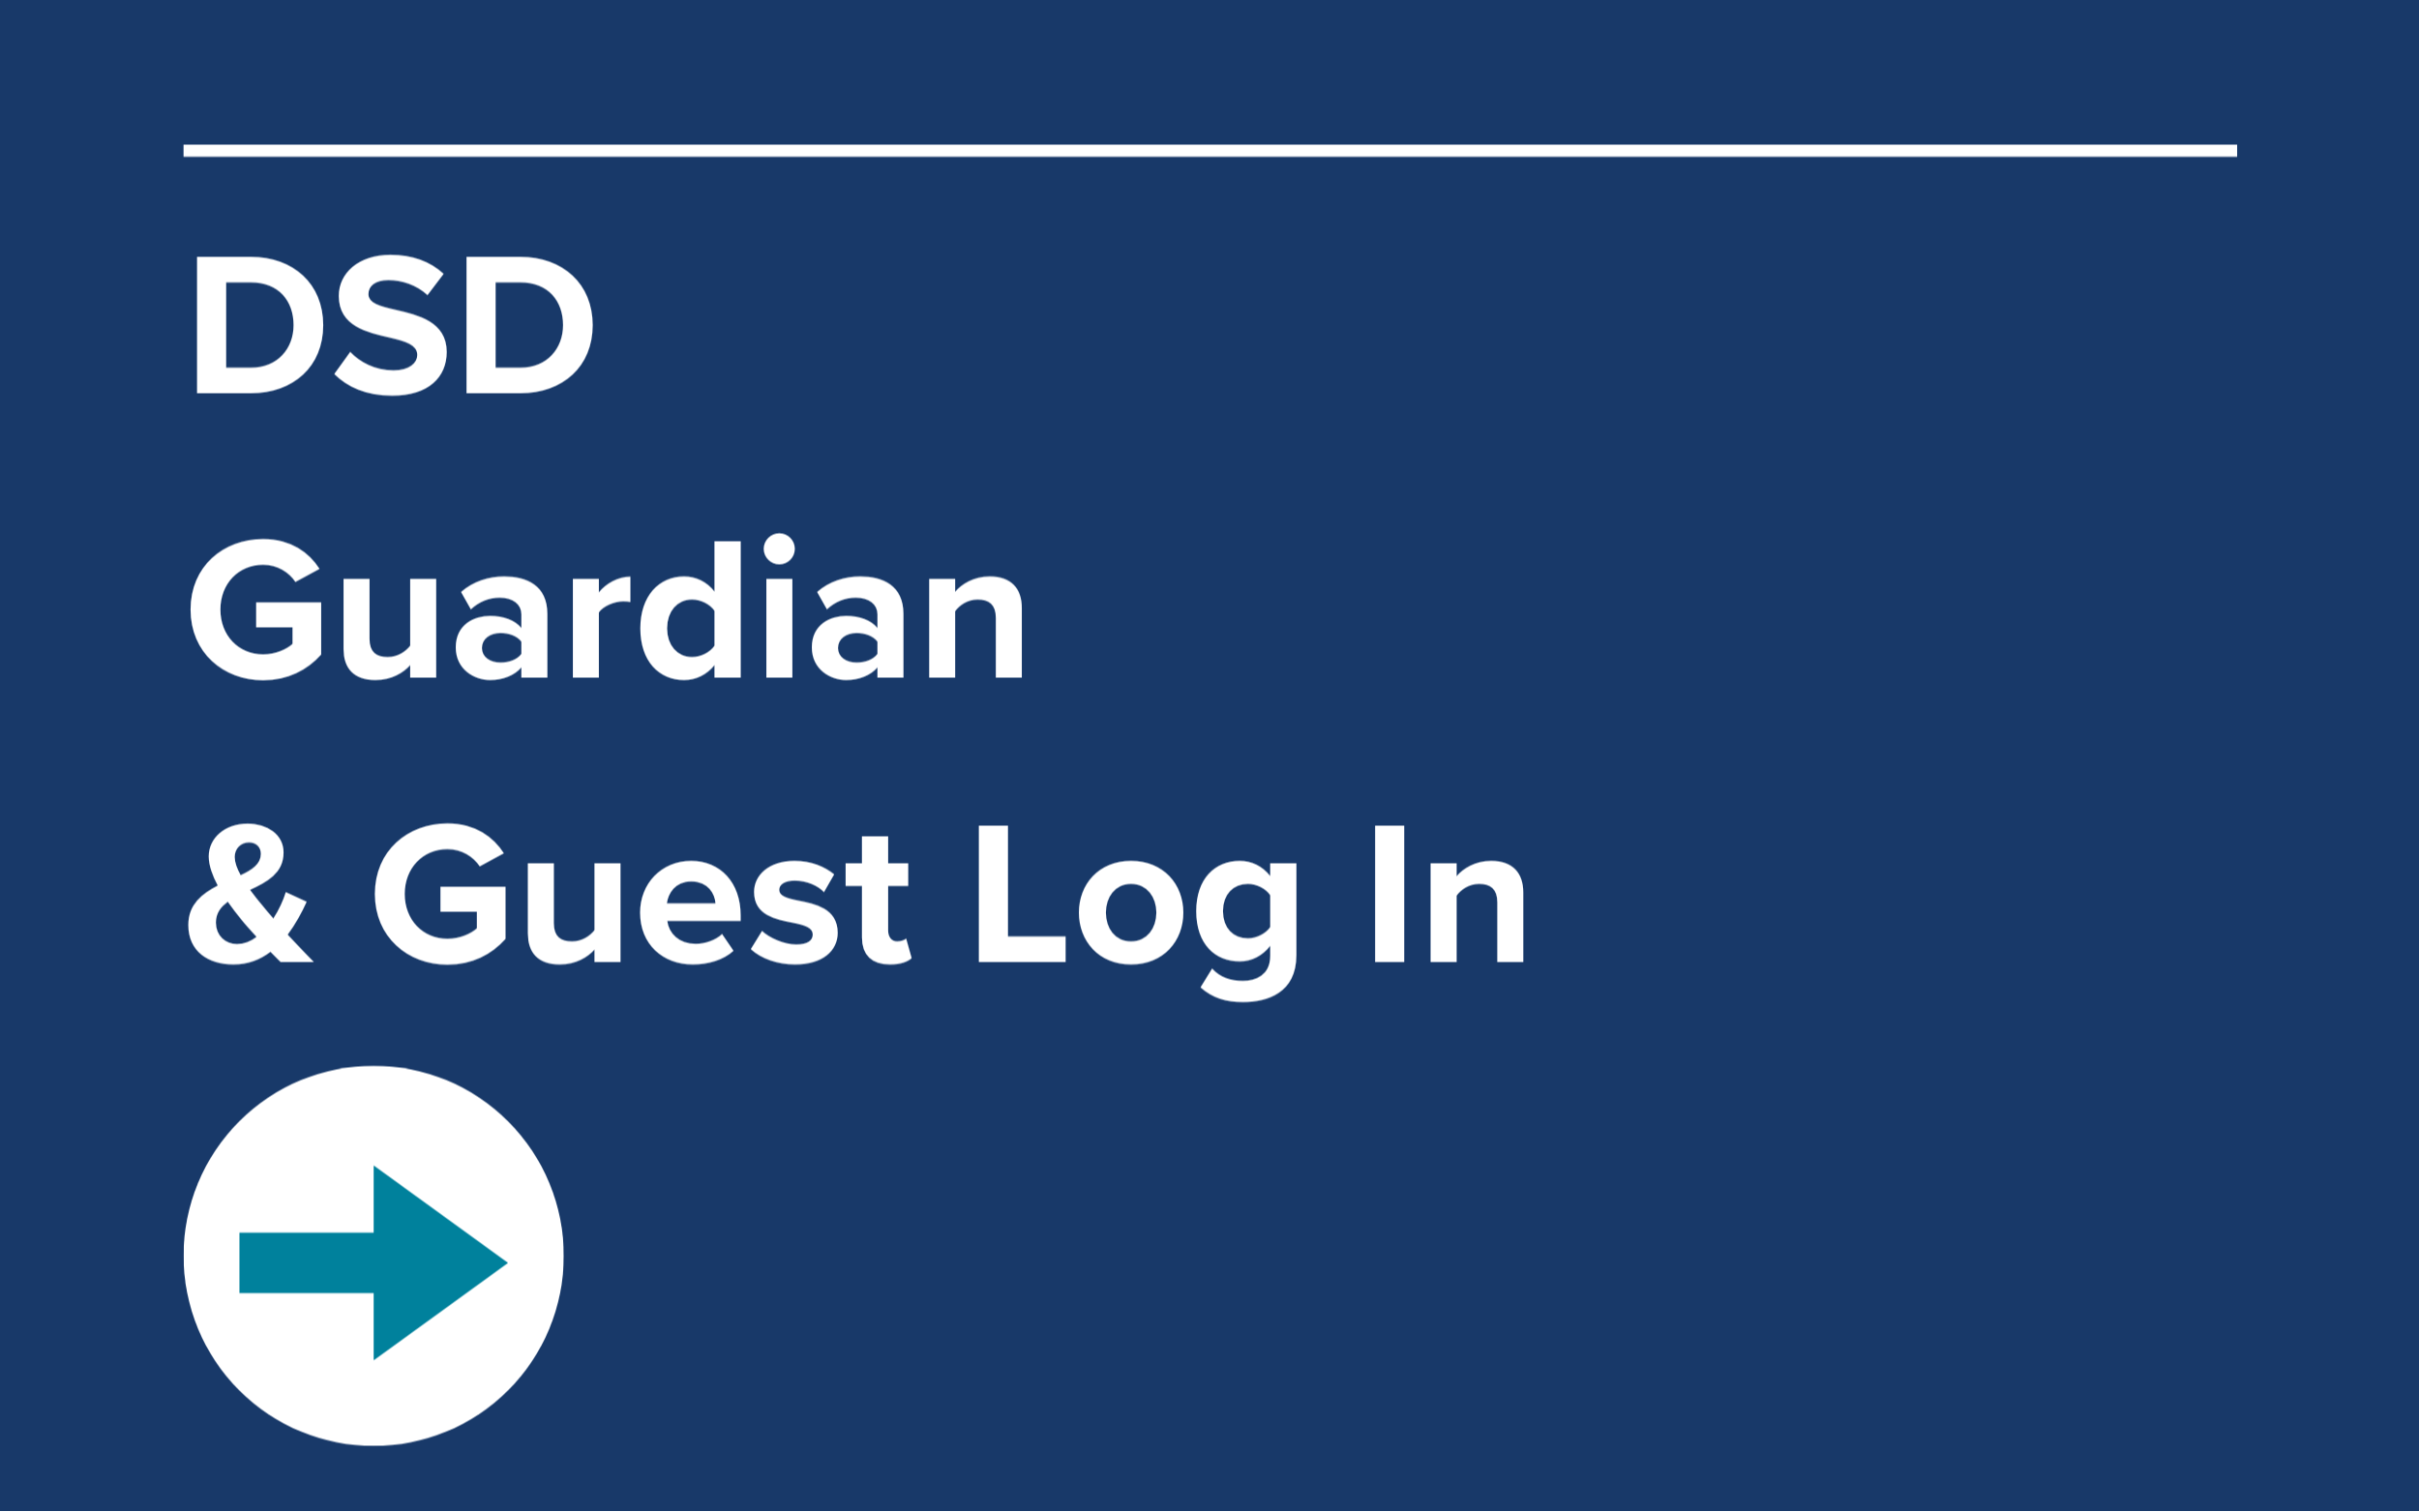 DSD Guardian & Guest Log In